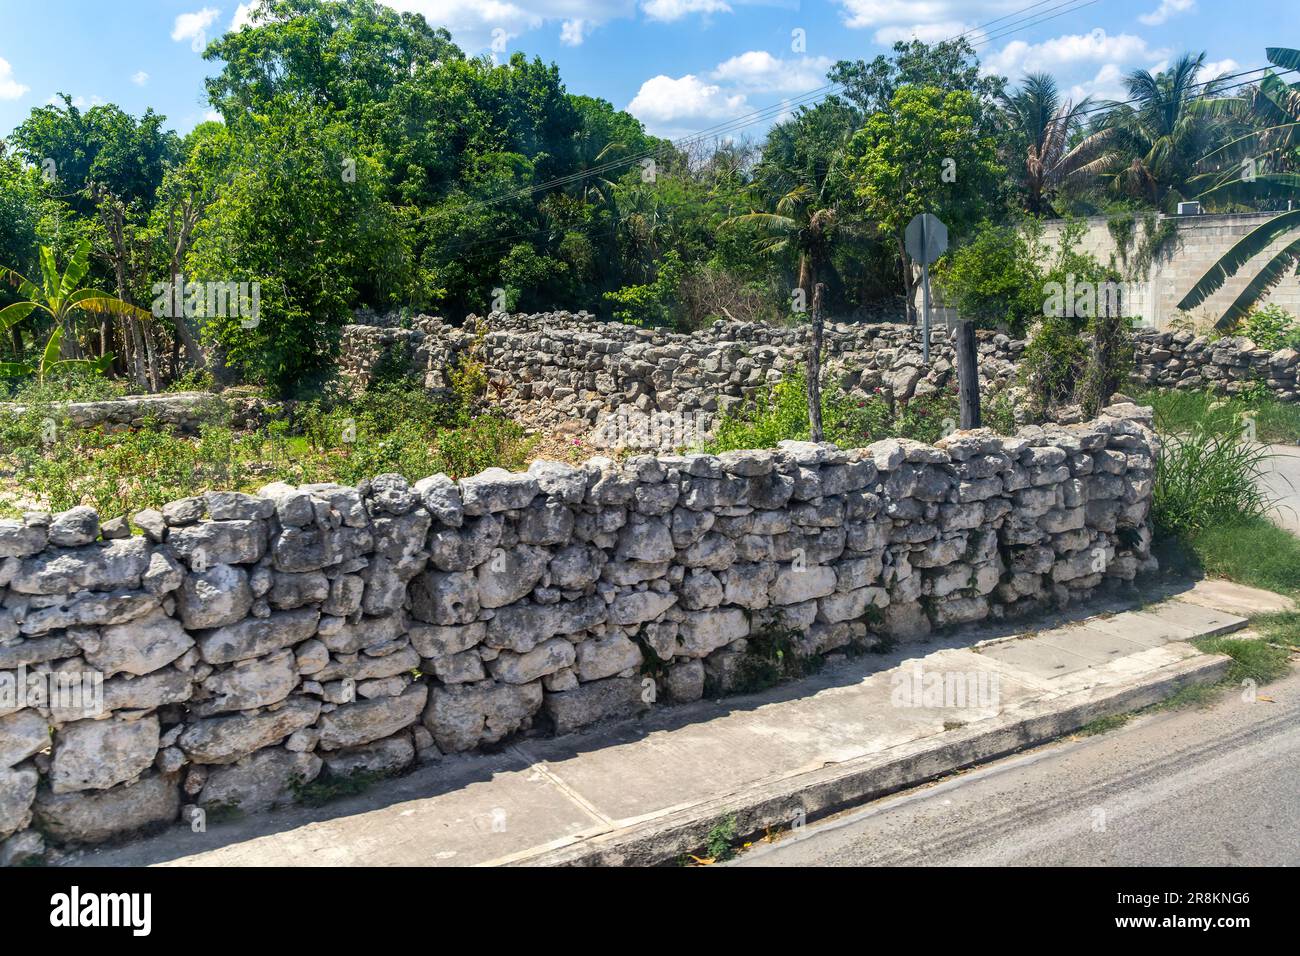 View from bus window of carboniferous limestone stone blocks in dry stone walls, Hunucma, Yucatan State, Mexico Stock Photo